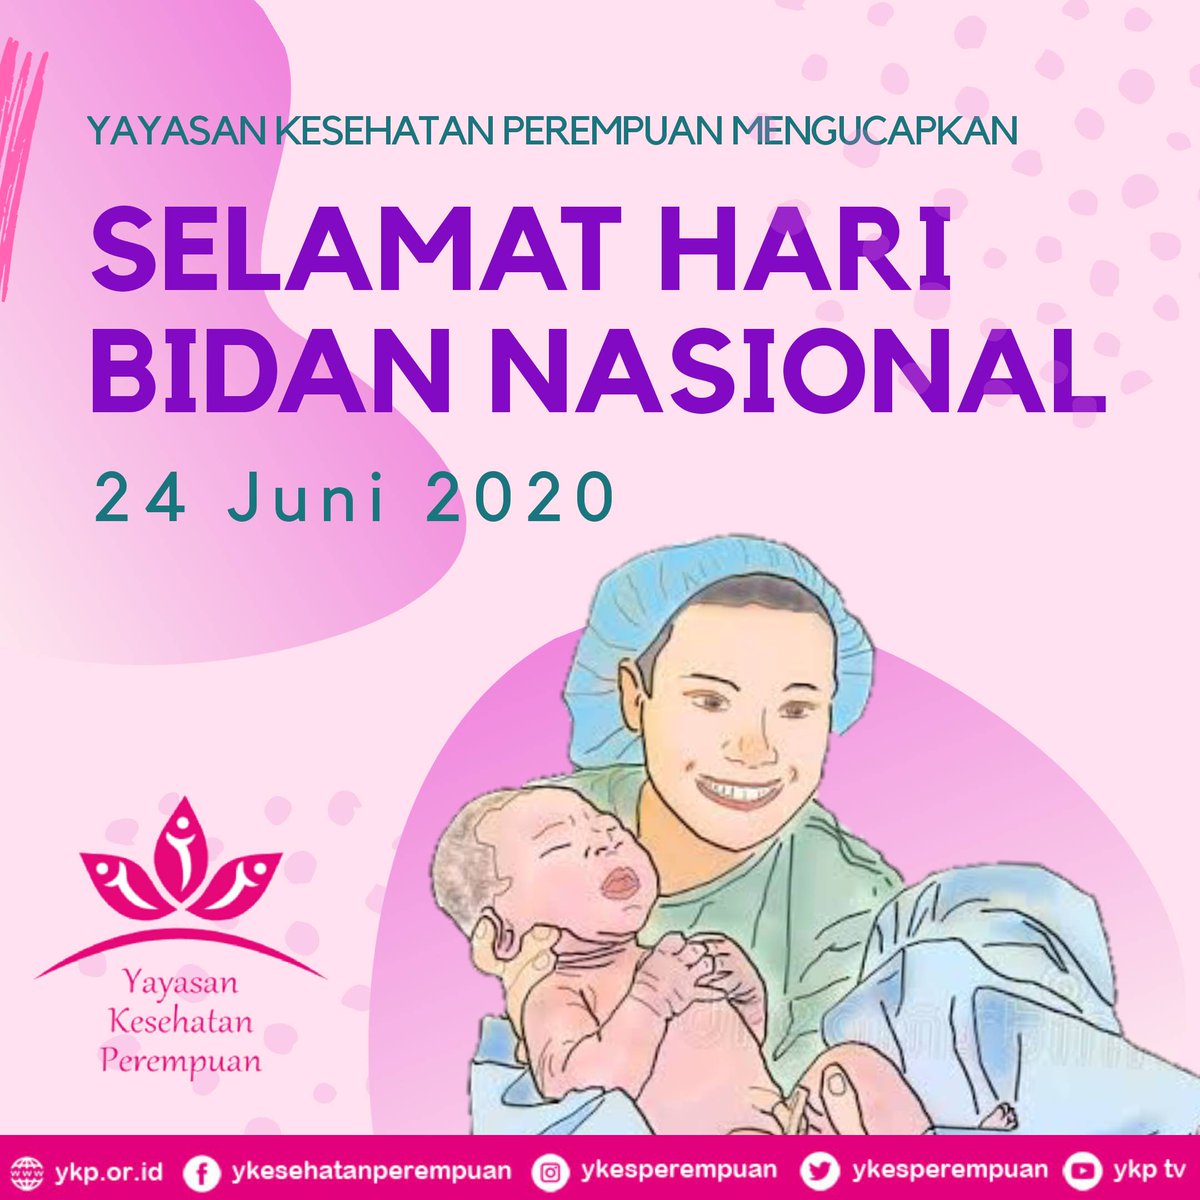 Selamat Hari Bidan Nasional 2020 @ppibi

#HariBidanNasional
#BidanIndonesia
#MariSalingDukung 
#SalingJaga 
#IndonesiaLawanCovid19